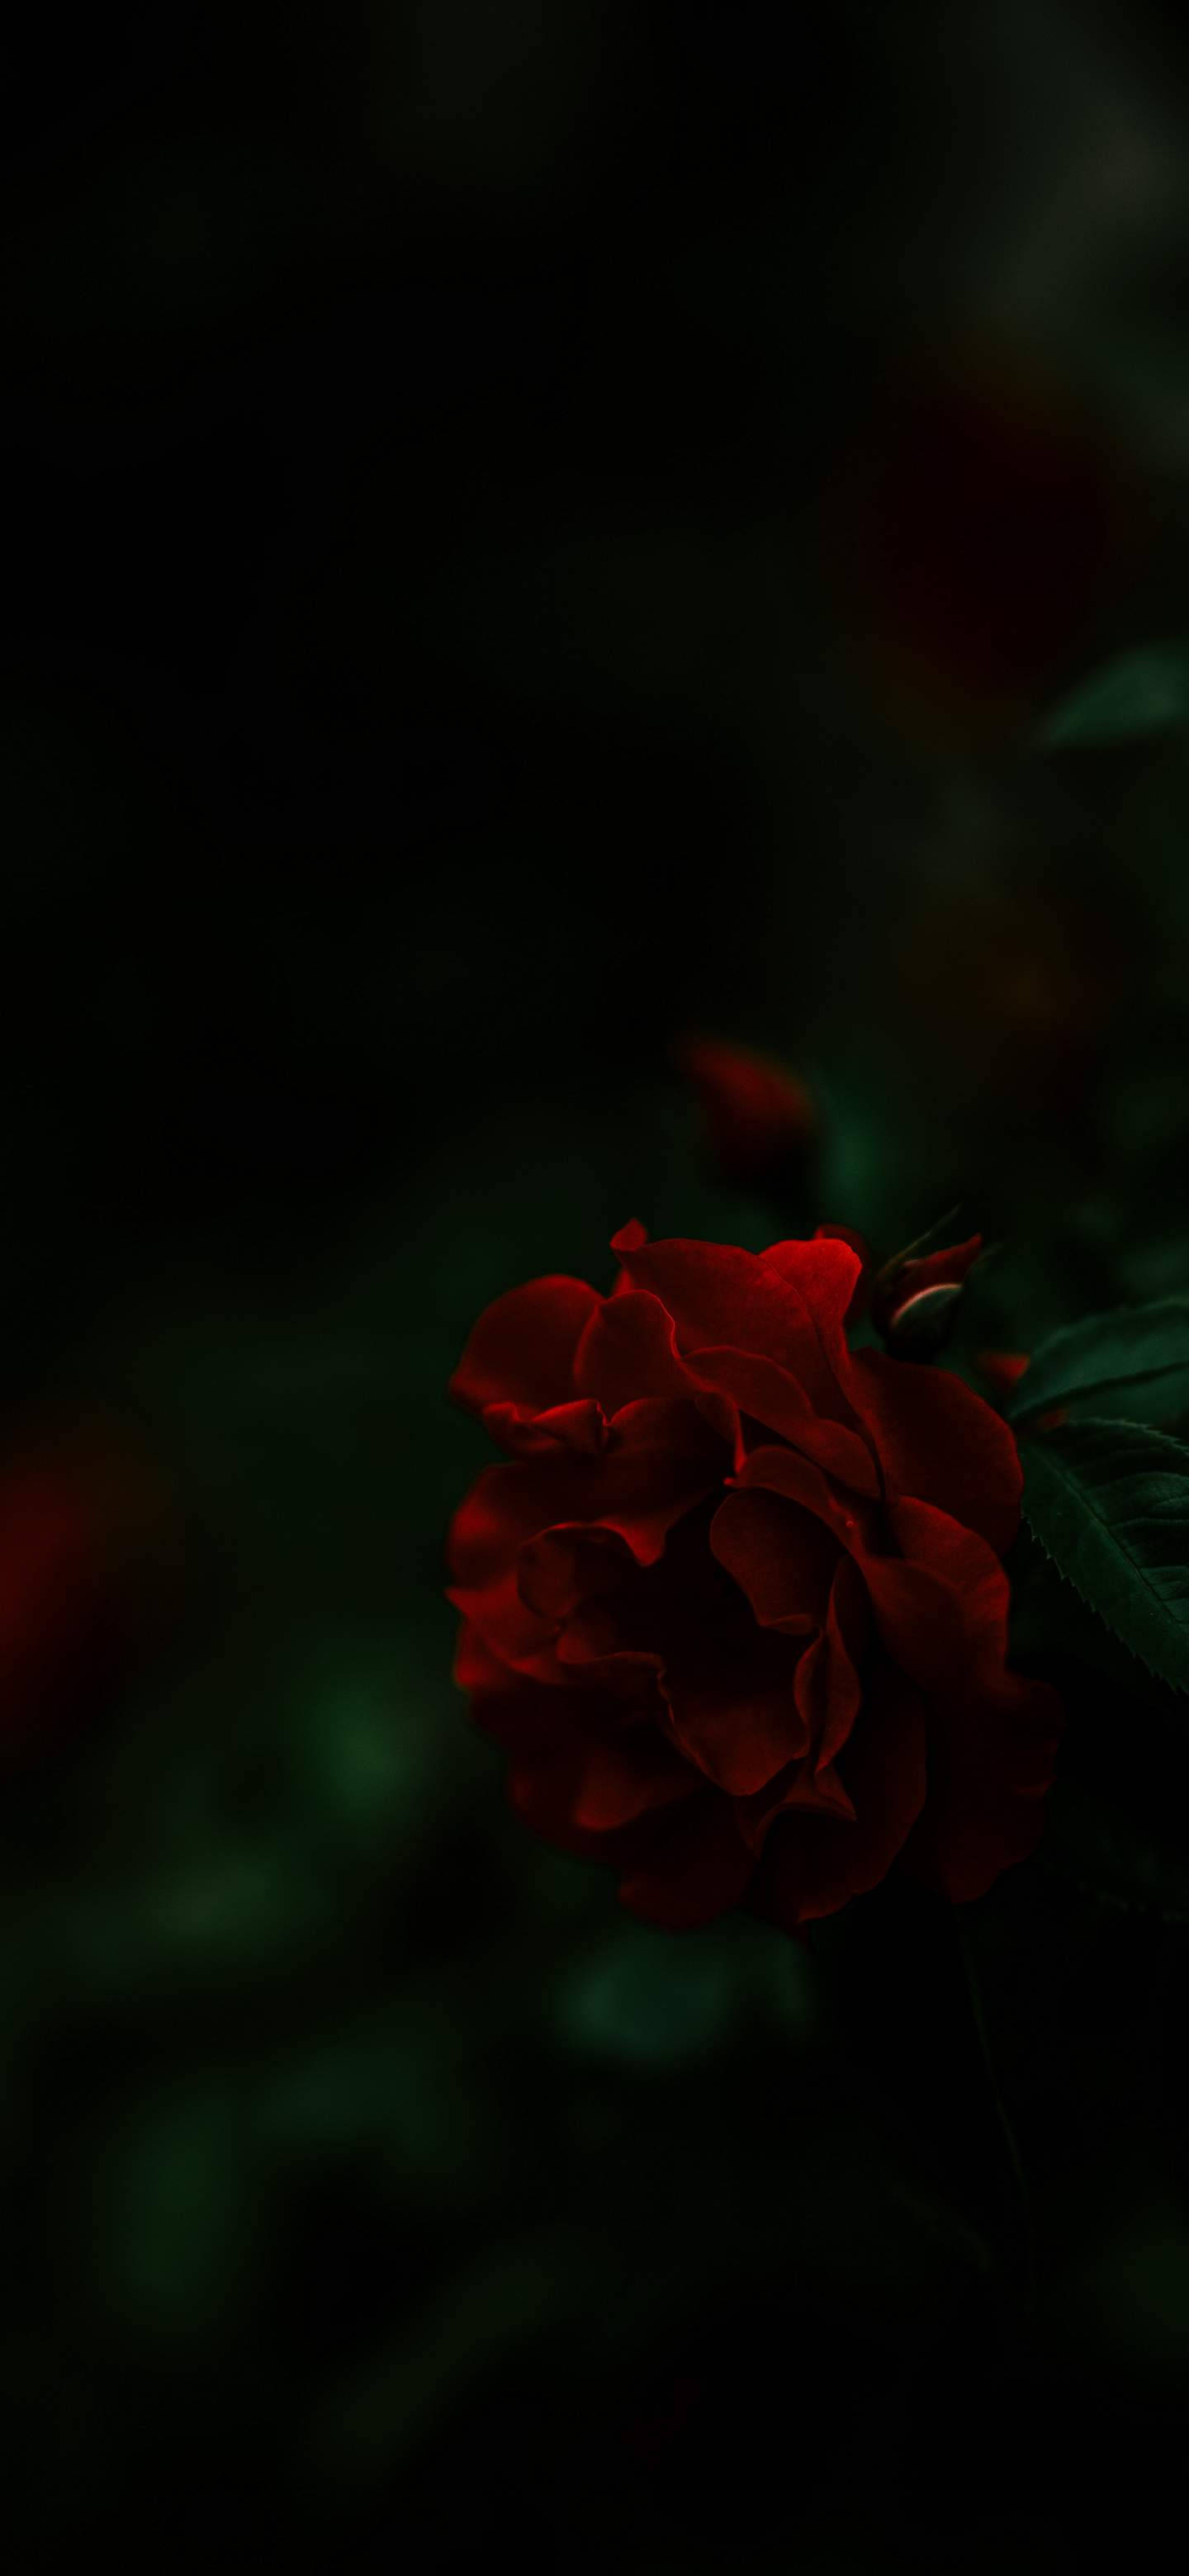 Majestic Blooming Rose On Oneplus 7 Pro Display Wallpaper